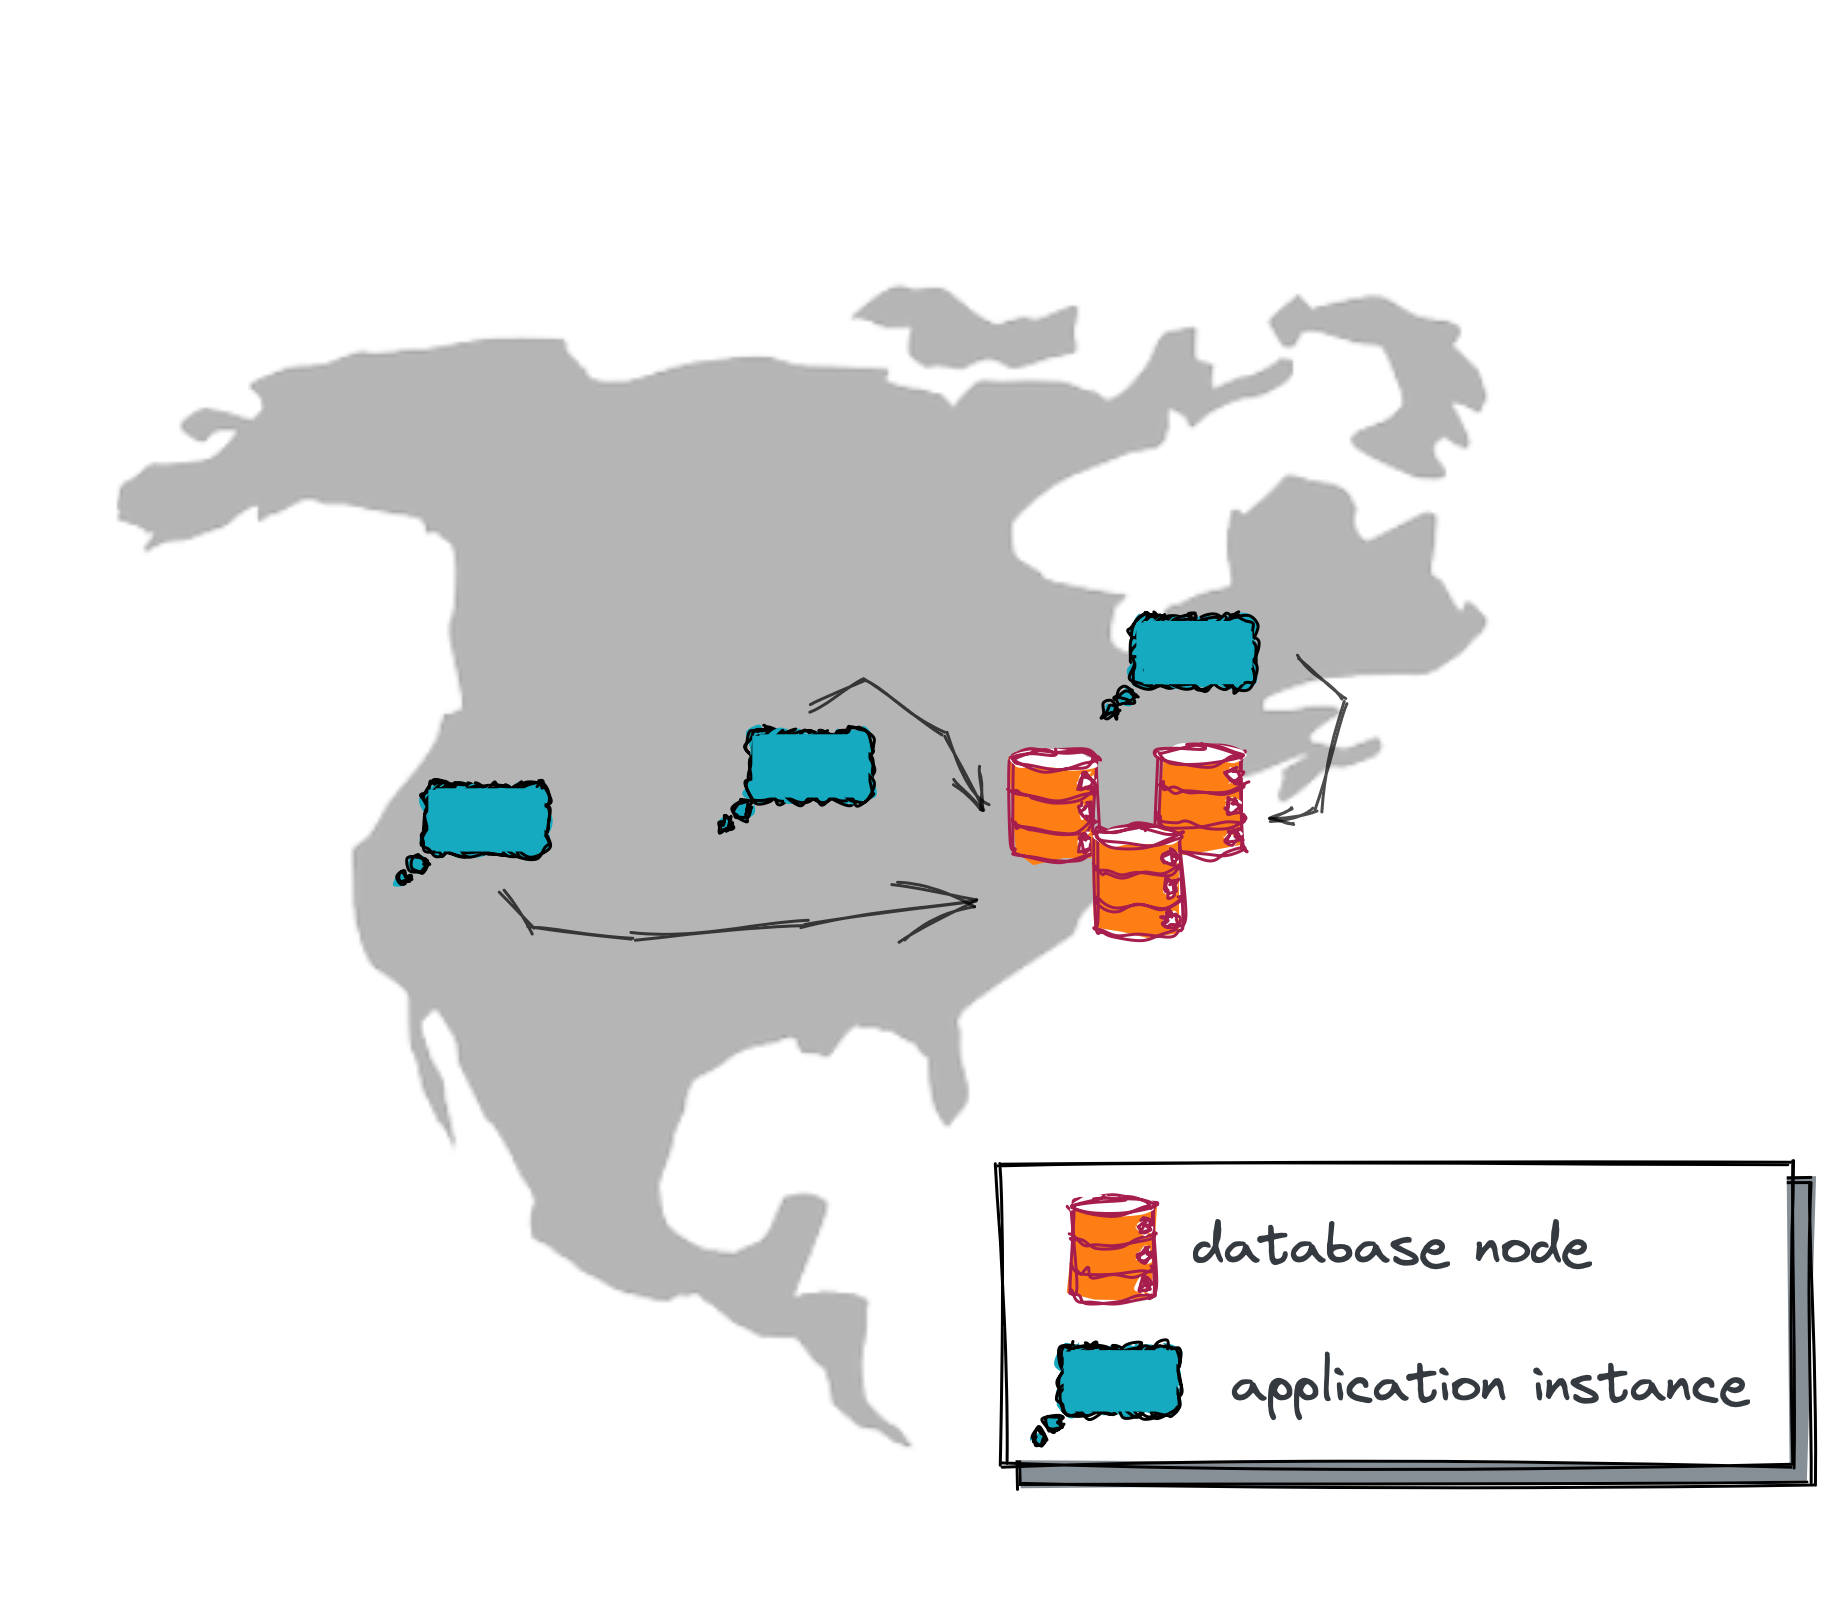 Several geo-messenger instances deployed across multiple cloud regions (current map)